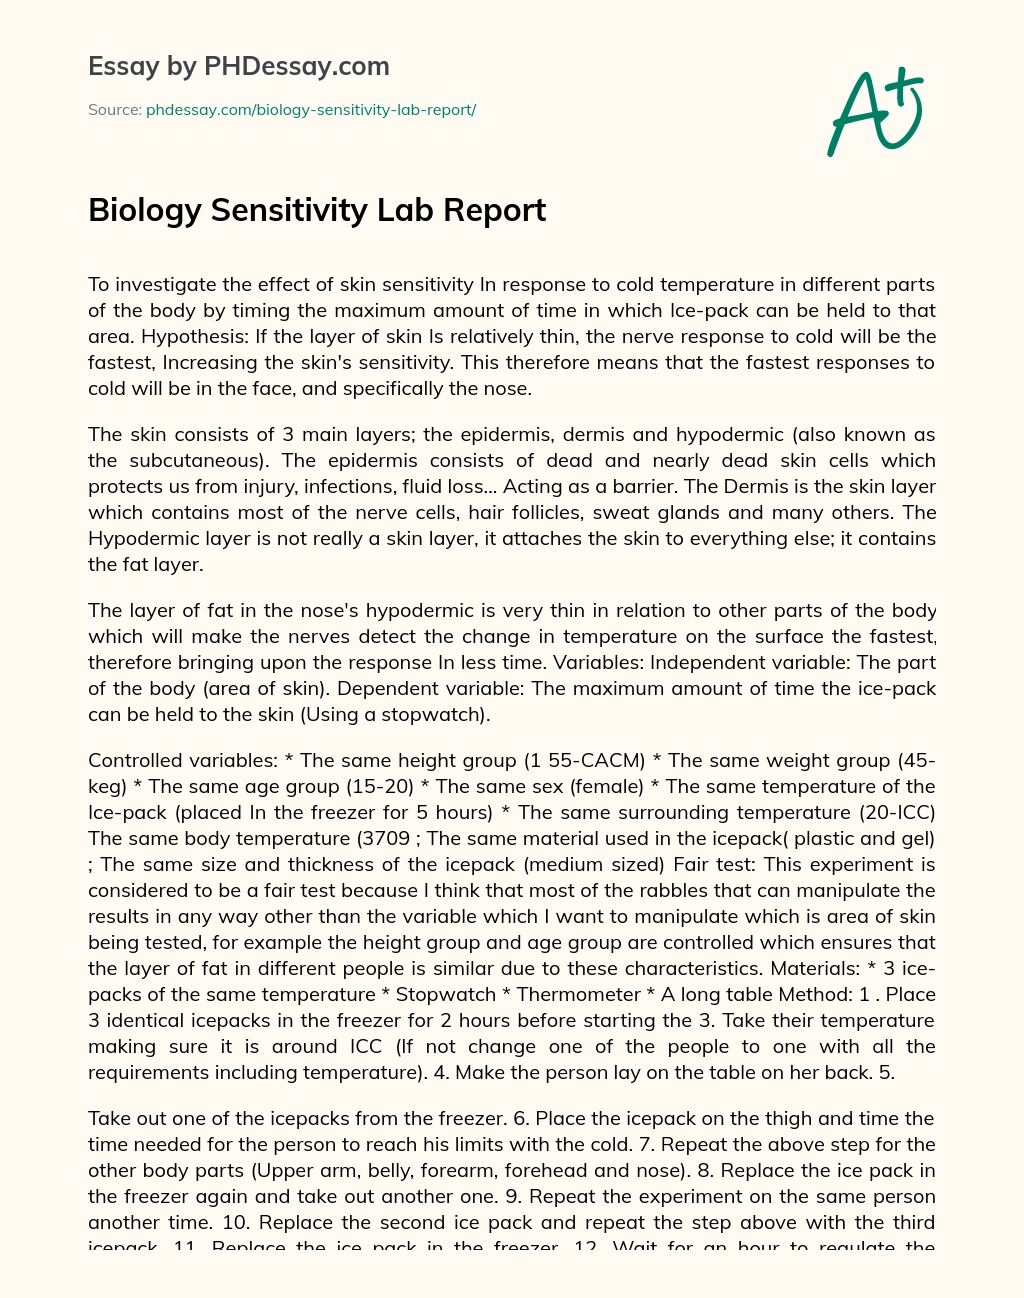 Biology Sensitivity Lab Report essay